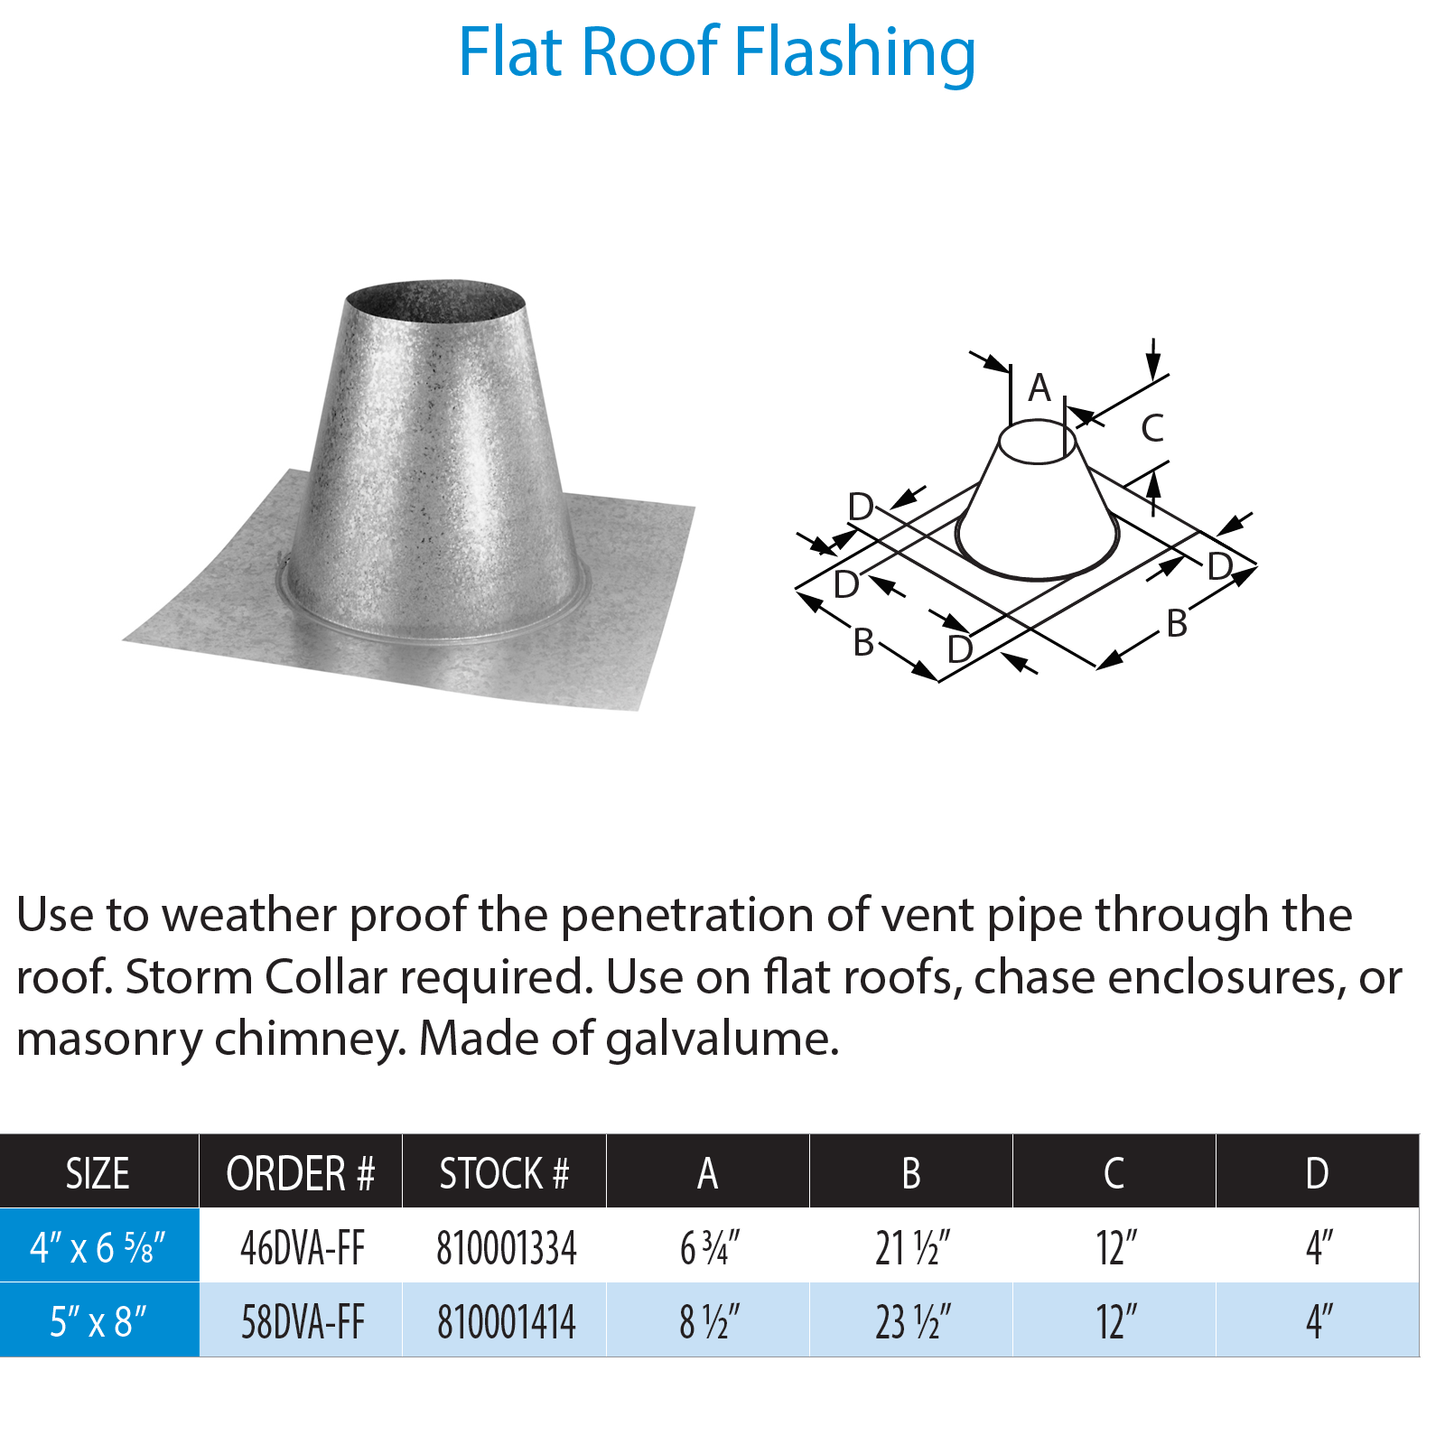 DuraVent DirectVent Pro Flat Roof Flashing | 46DVA-FF